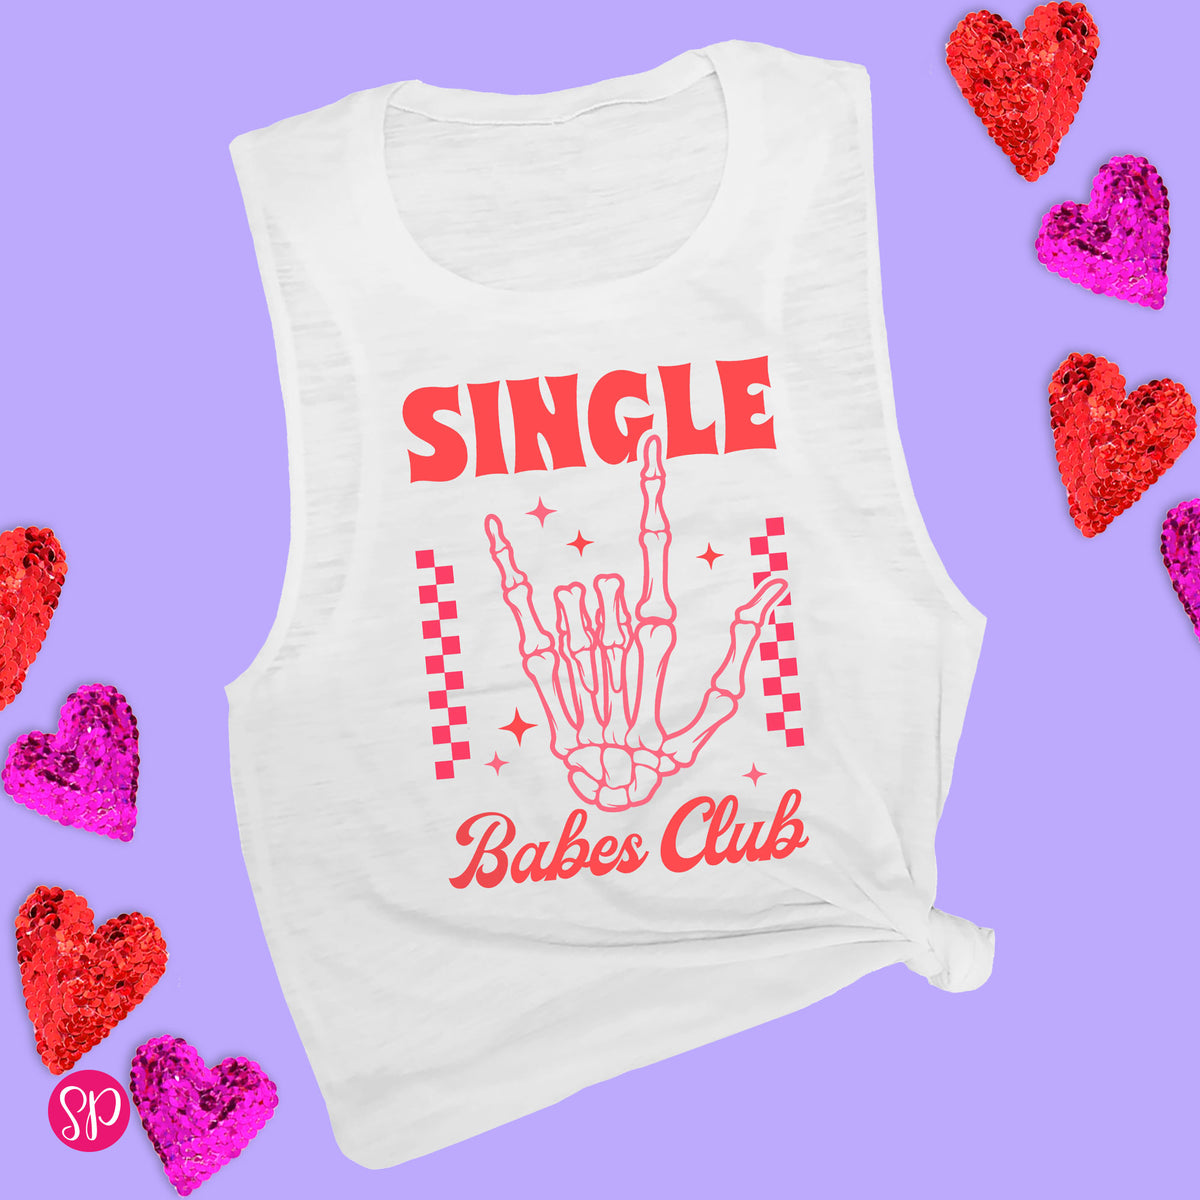 Single Babes Club Muscle Tee